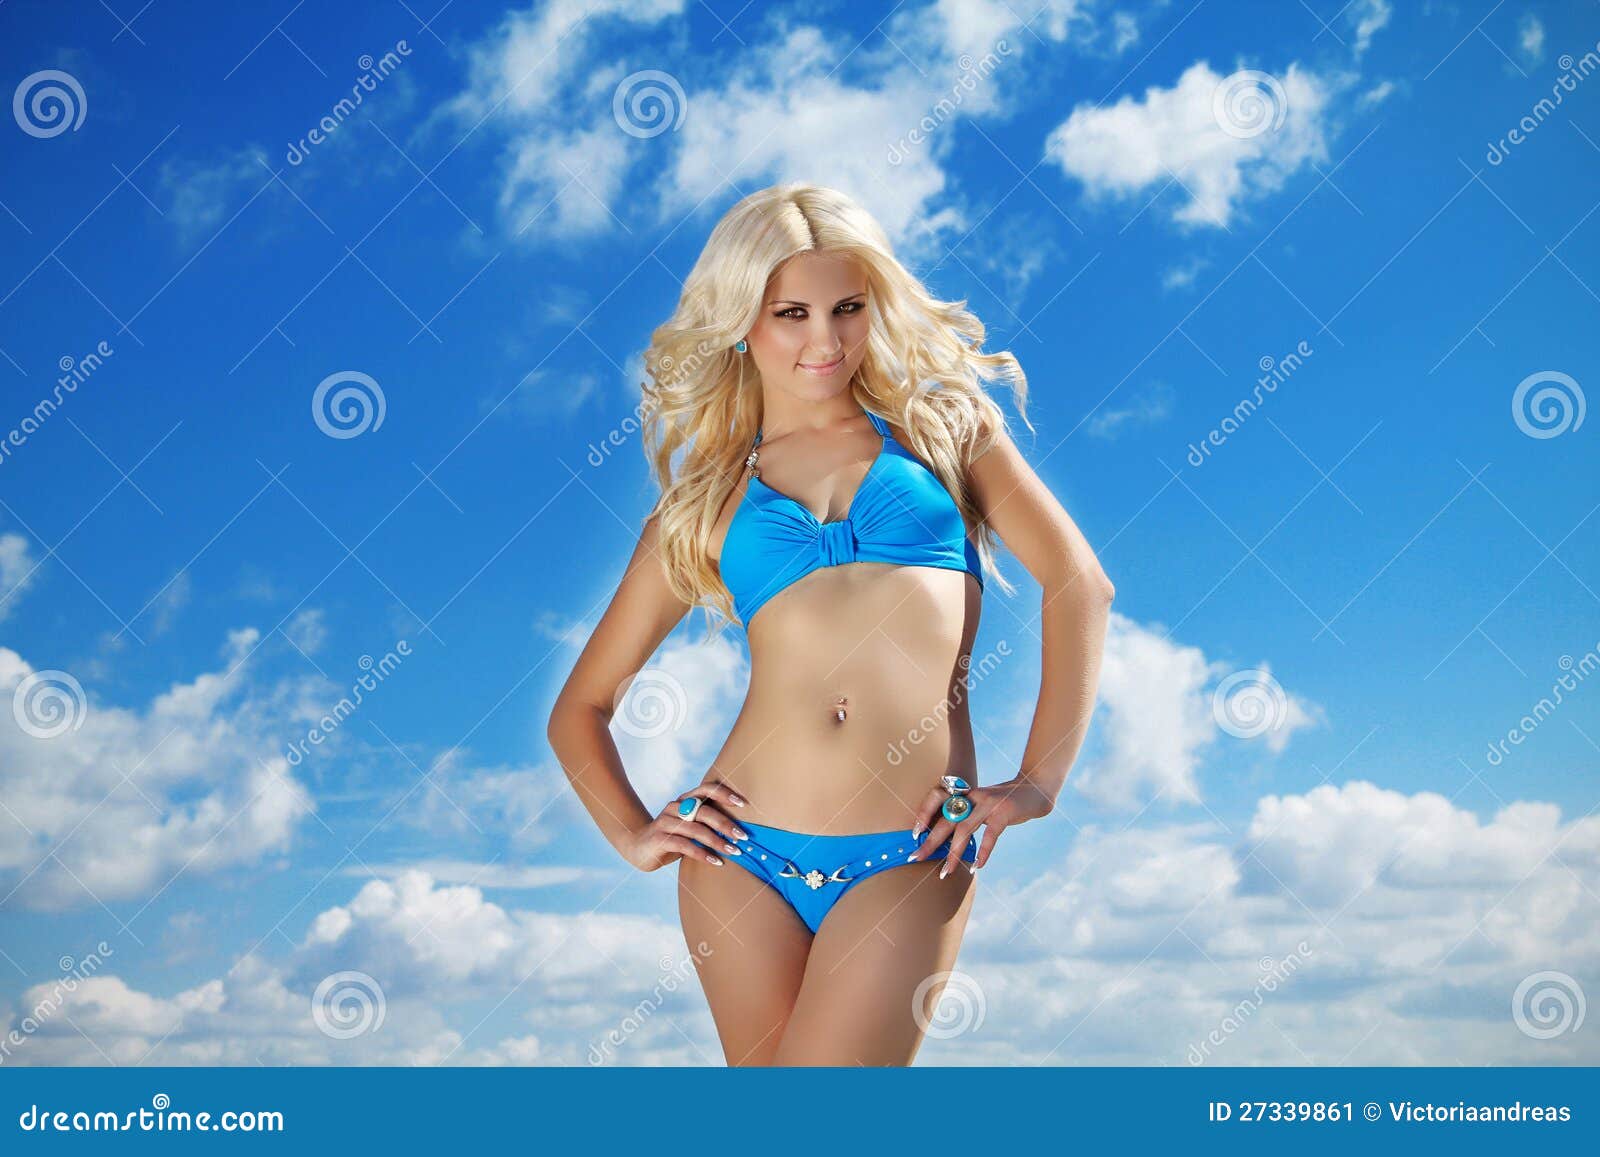 468 Blonde Mom Bikini Images, Stock Photos & Vectors